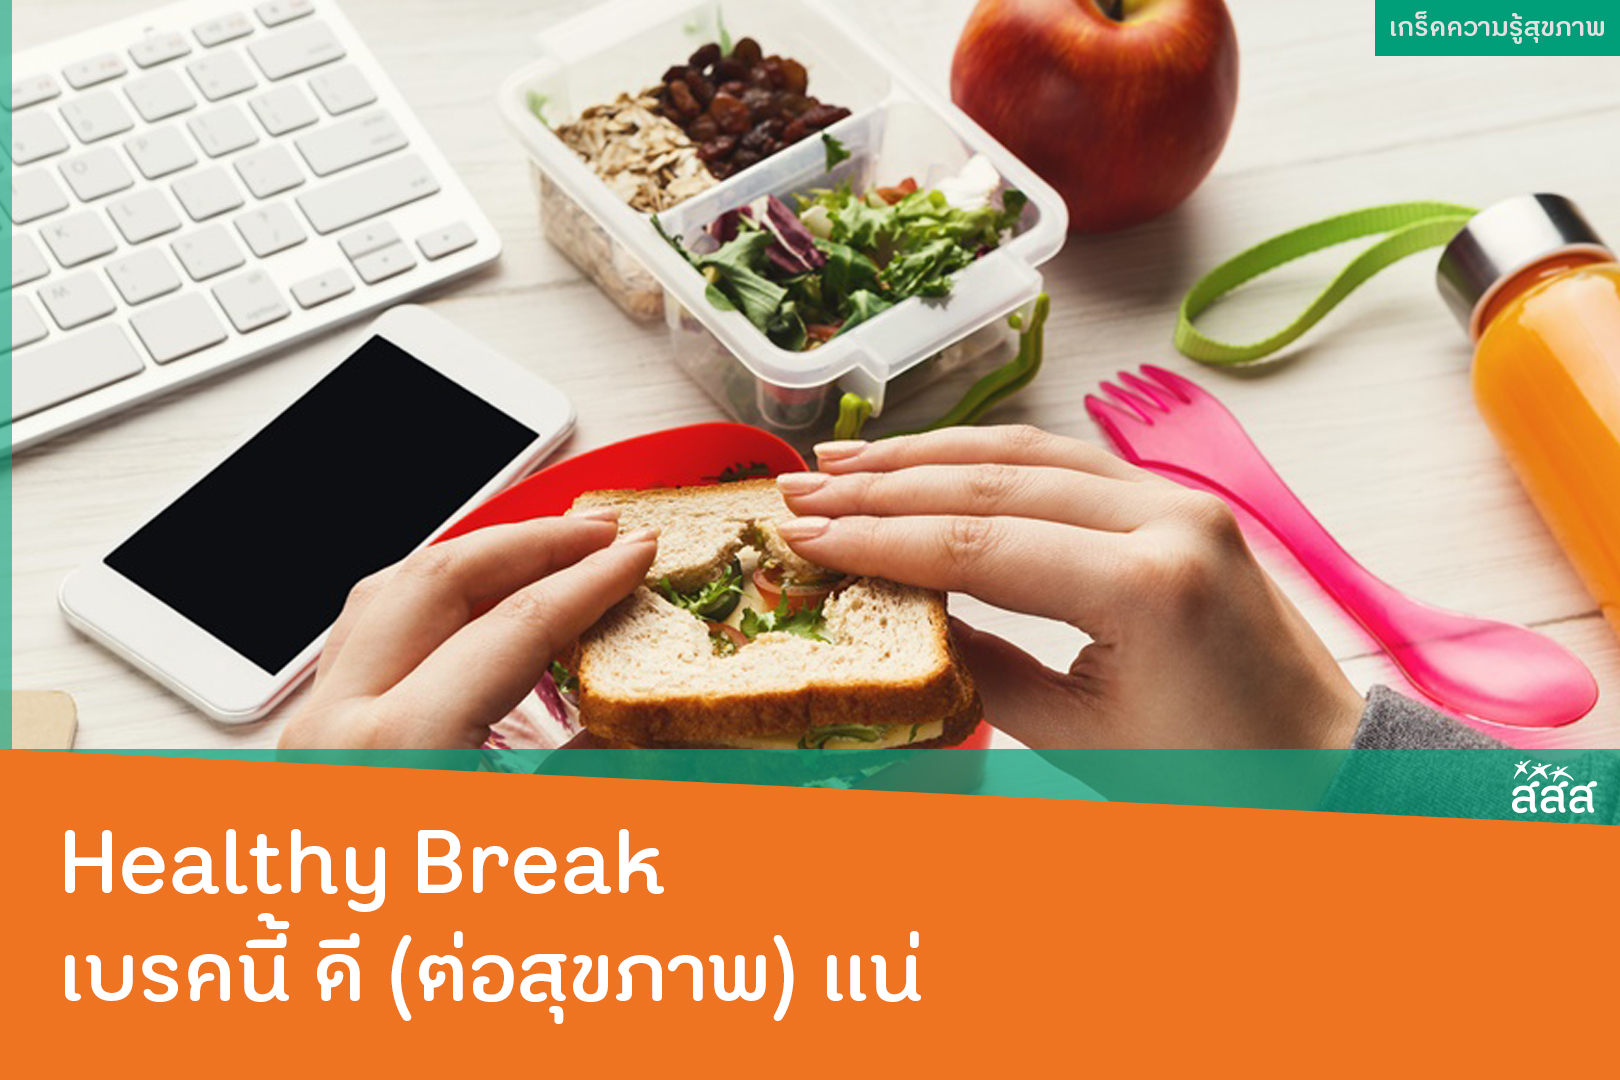 Healthy Break เบรคนี้ ดี (ต่อสุขภาพ) แน่ thaihealth